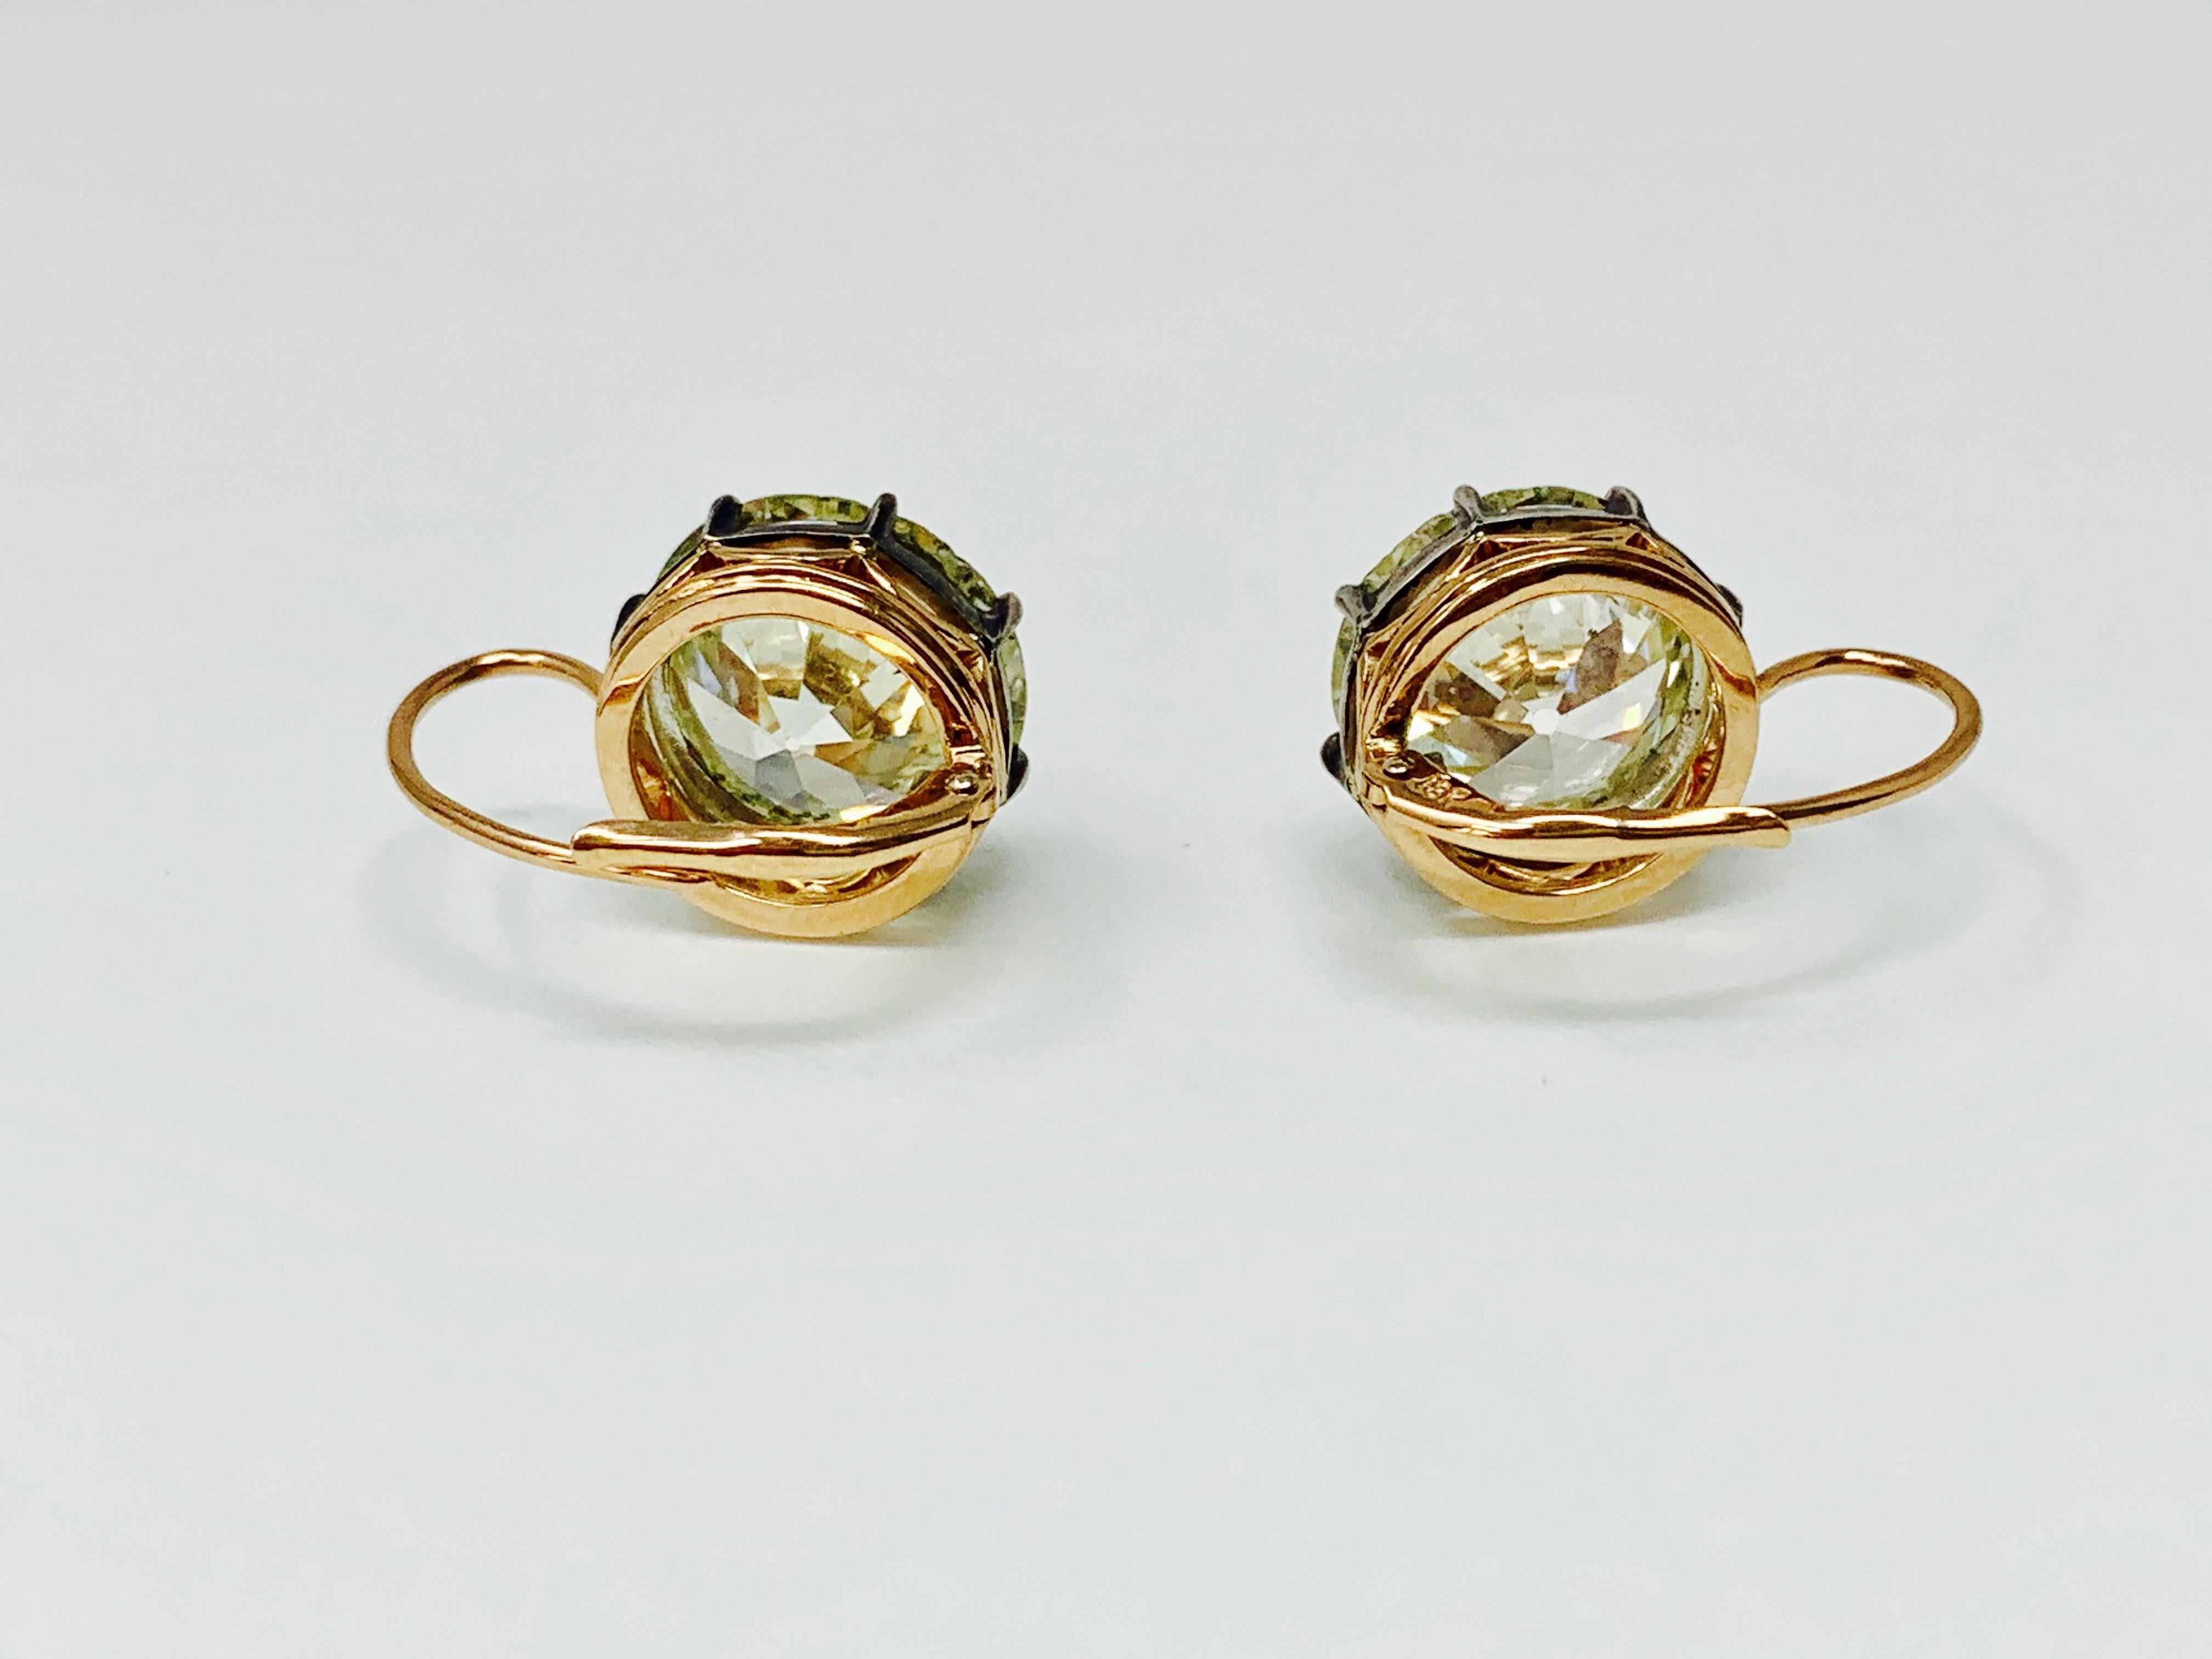 16.28 Carat Antique Style Old European Diamond Drop Earrings in Rose Gold 2